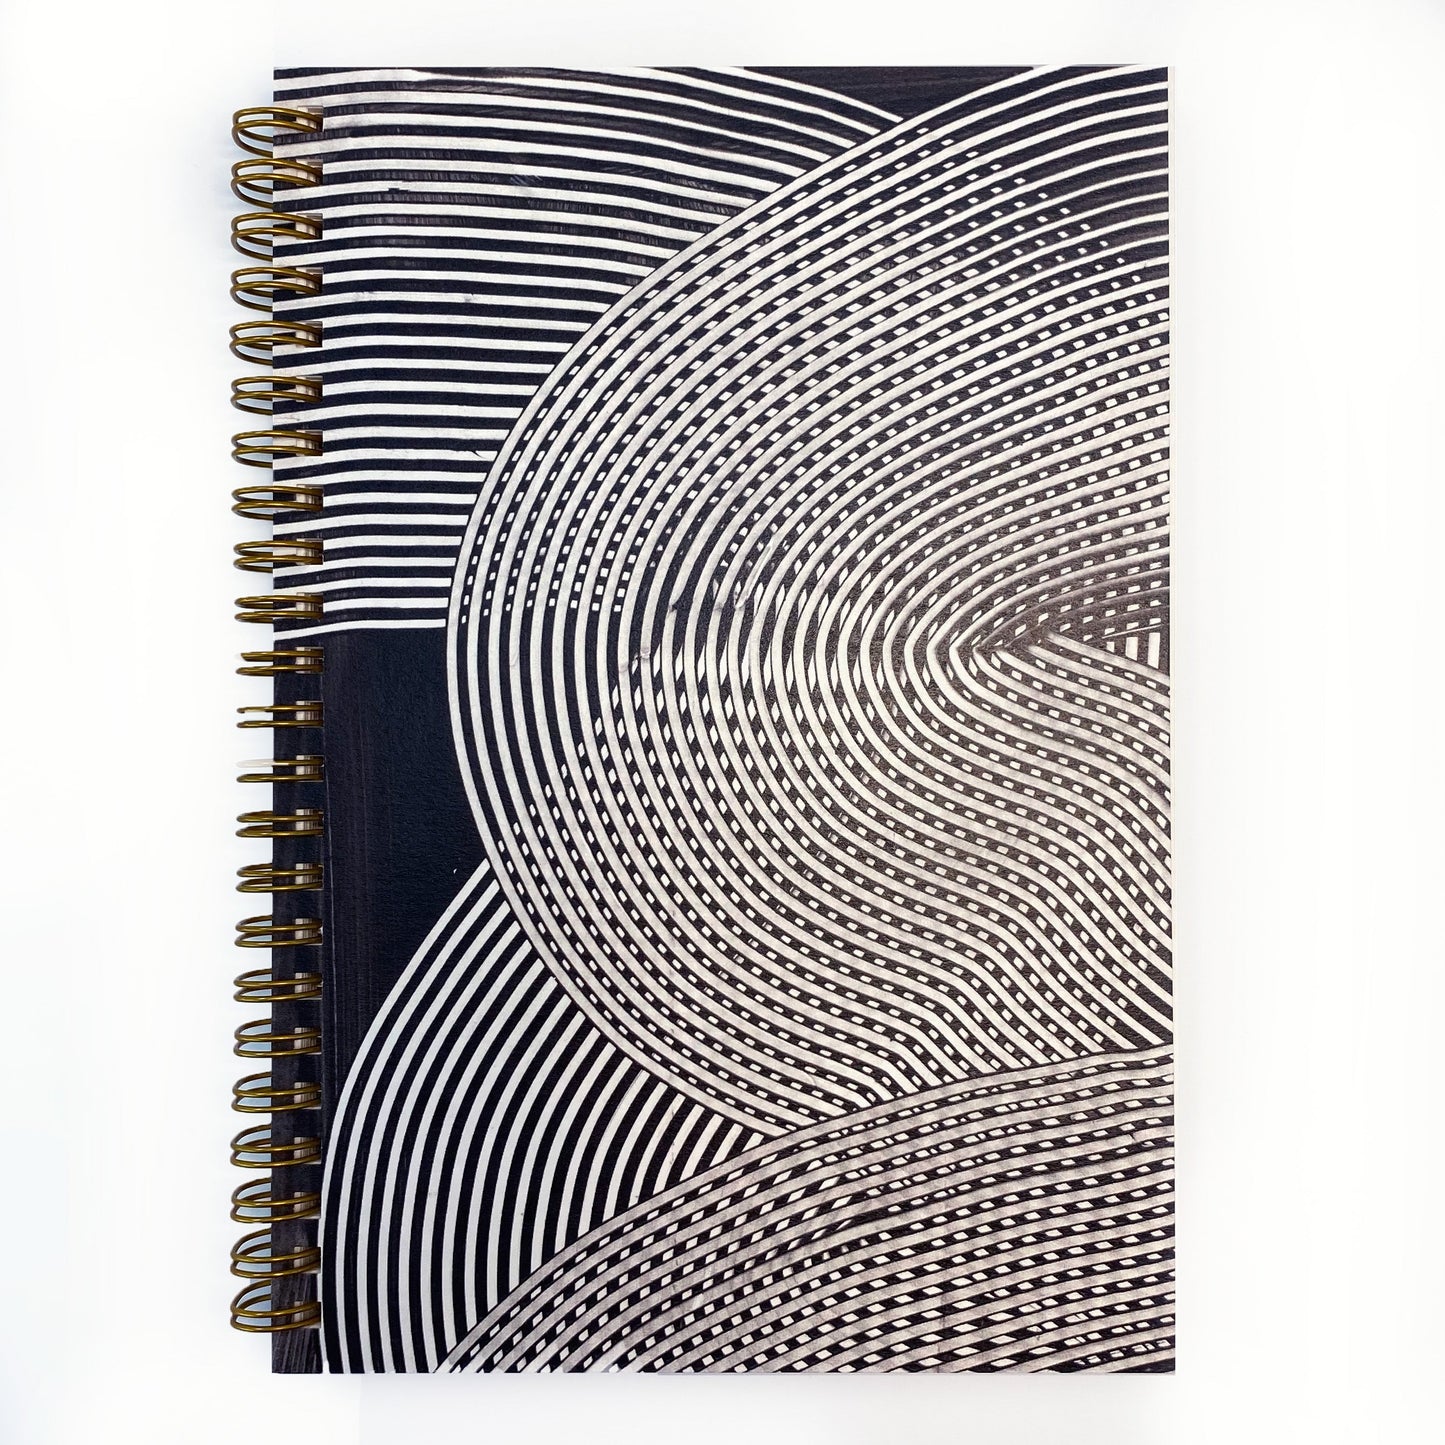 Curves Ahead: Black No.1-5.5”x8”- Big Ideas Spiral Bound Notebook